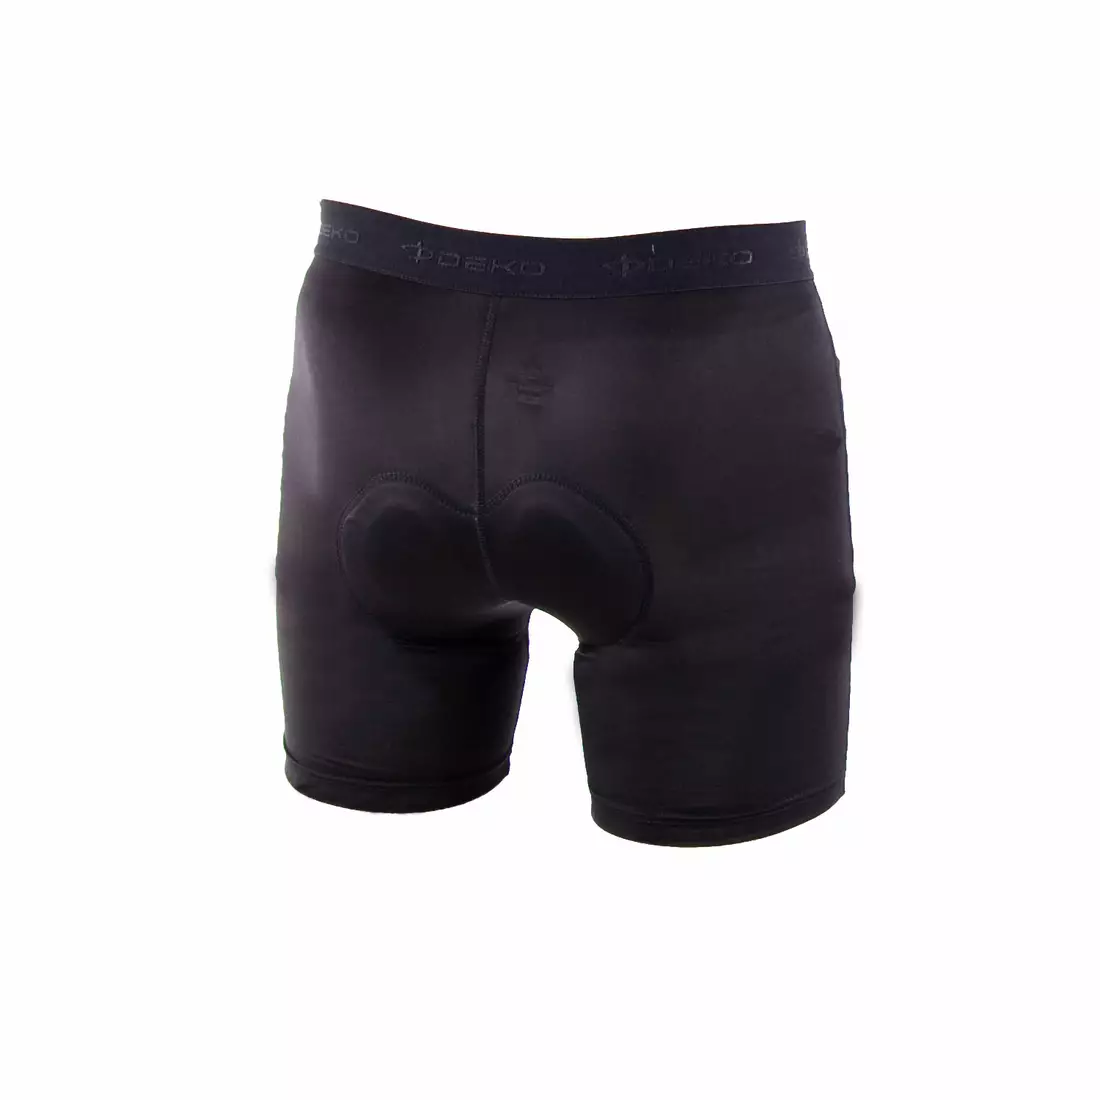 [Set] KAYMAQ insulated bib pants without CHAOS + DEKO padding bicycle boxer shorts with 3D GEL padding